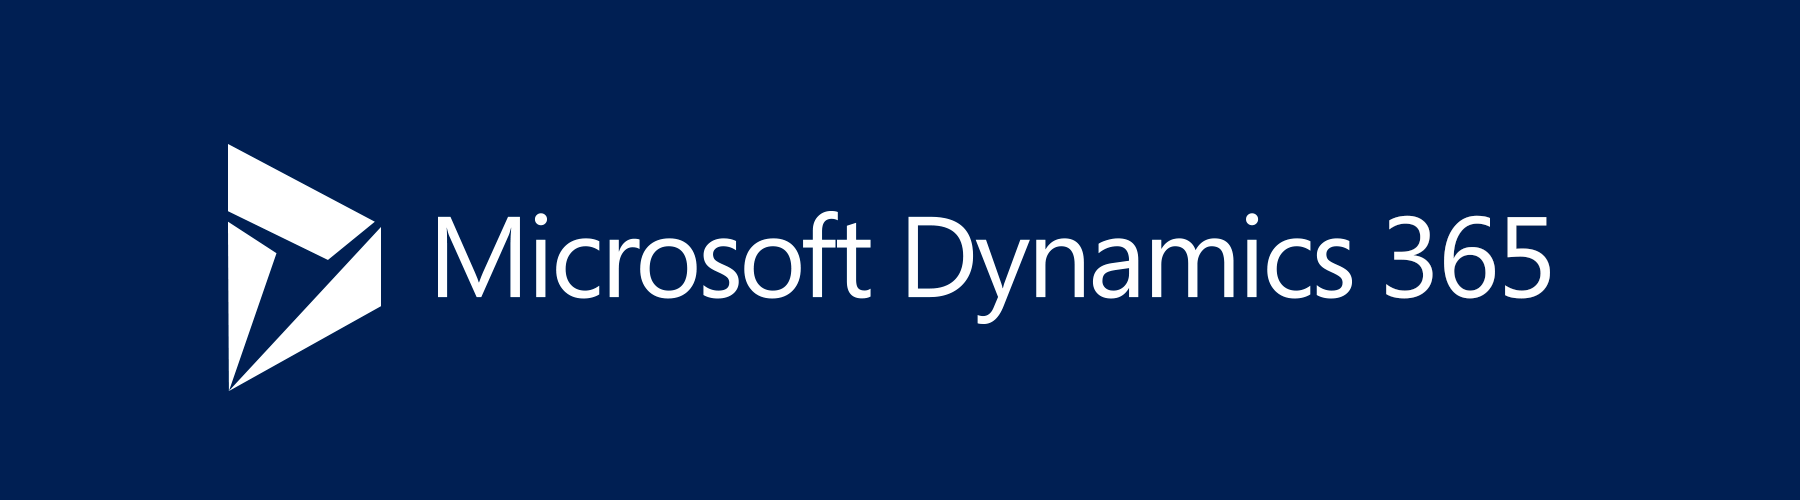 Microsoft Odyssey Logo - Microsoft Dynamics 365 - BDO Canada - Outsourcing